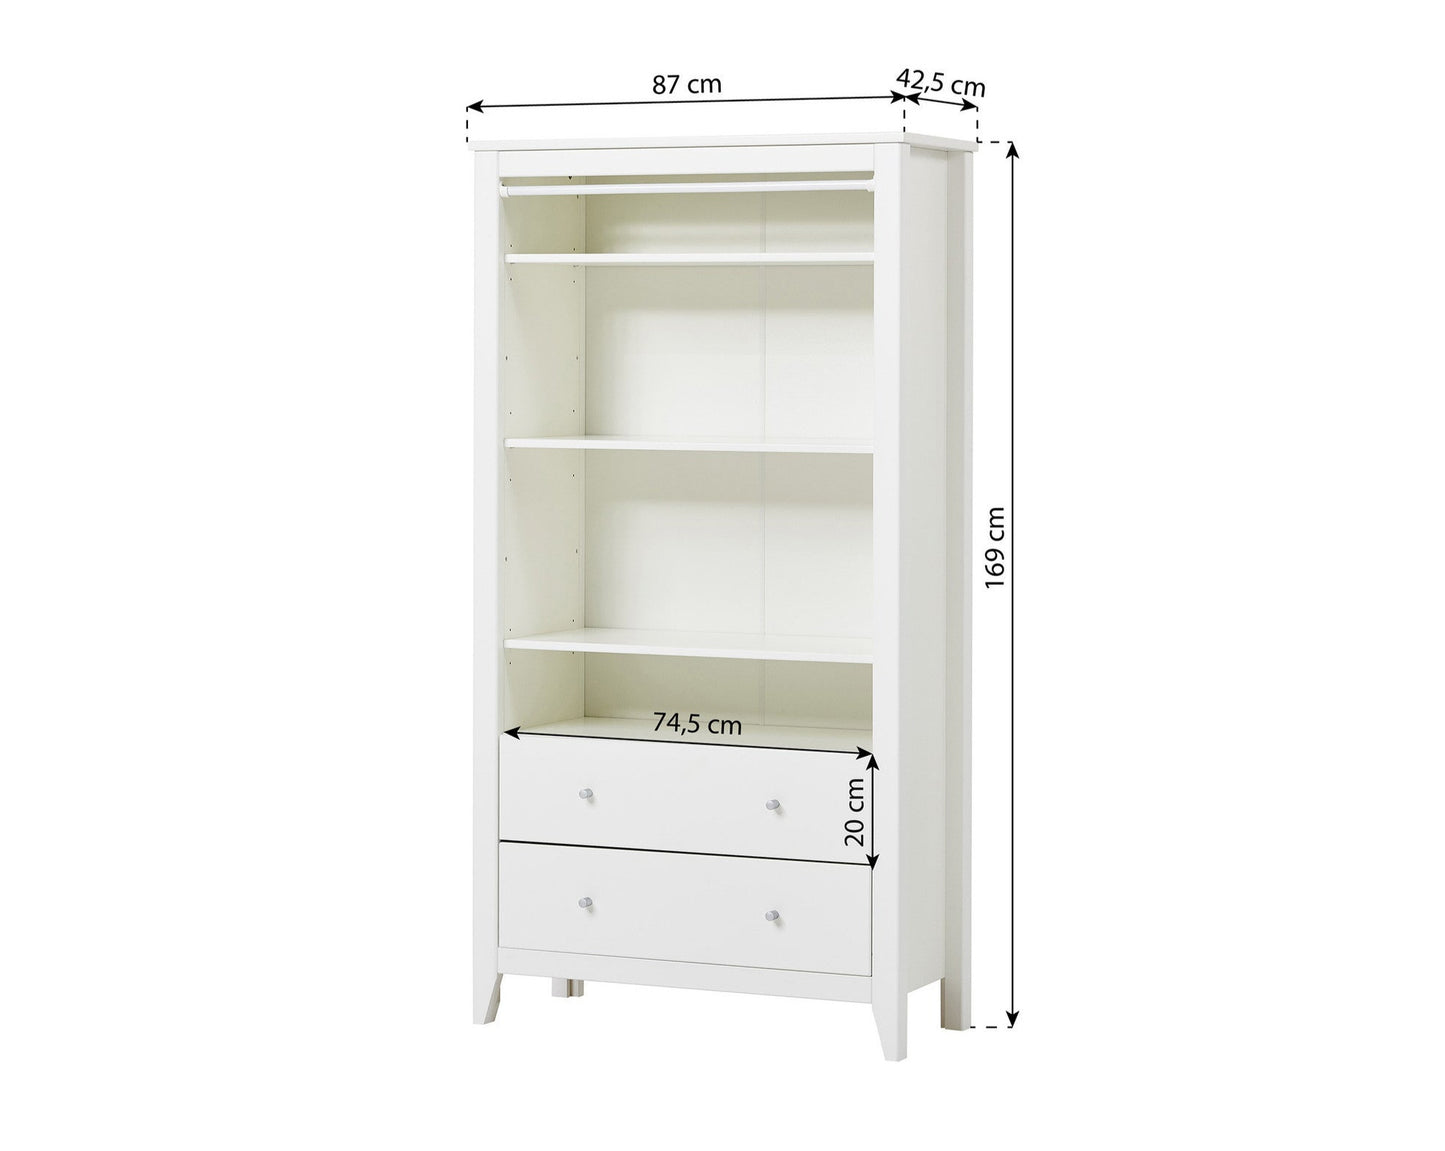 HANS - Wardrobe - 3 shelves and 2 drawers - white